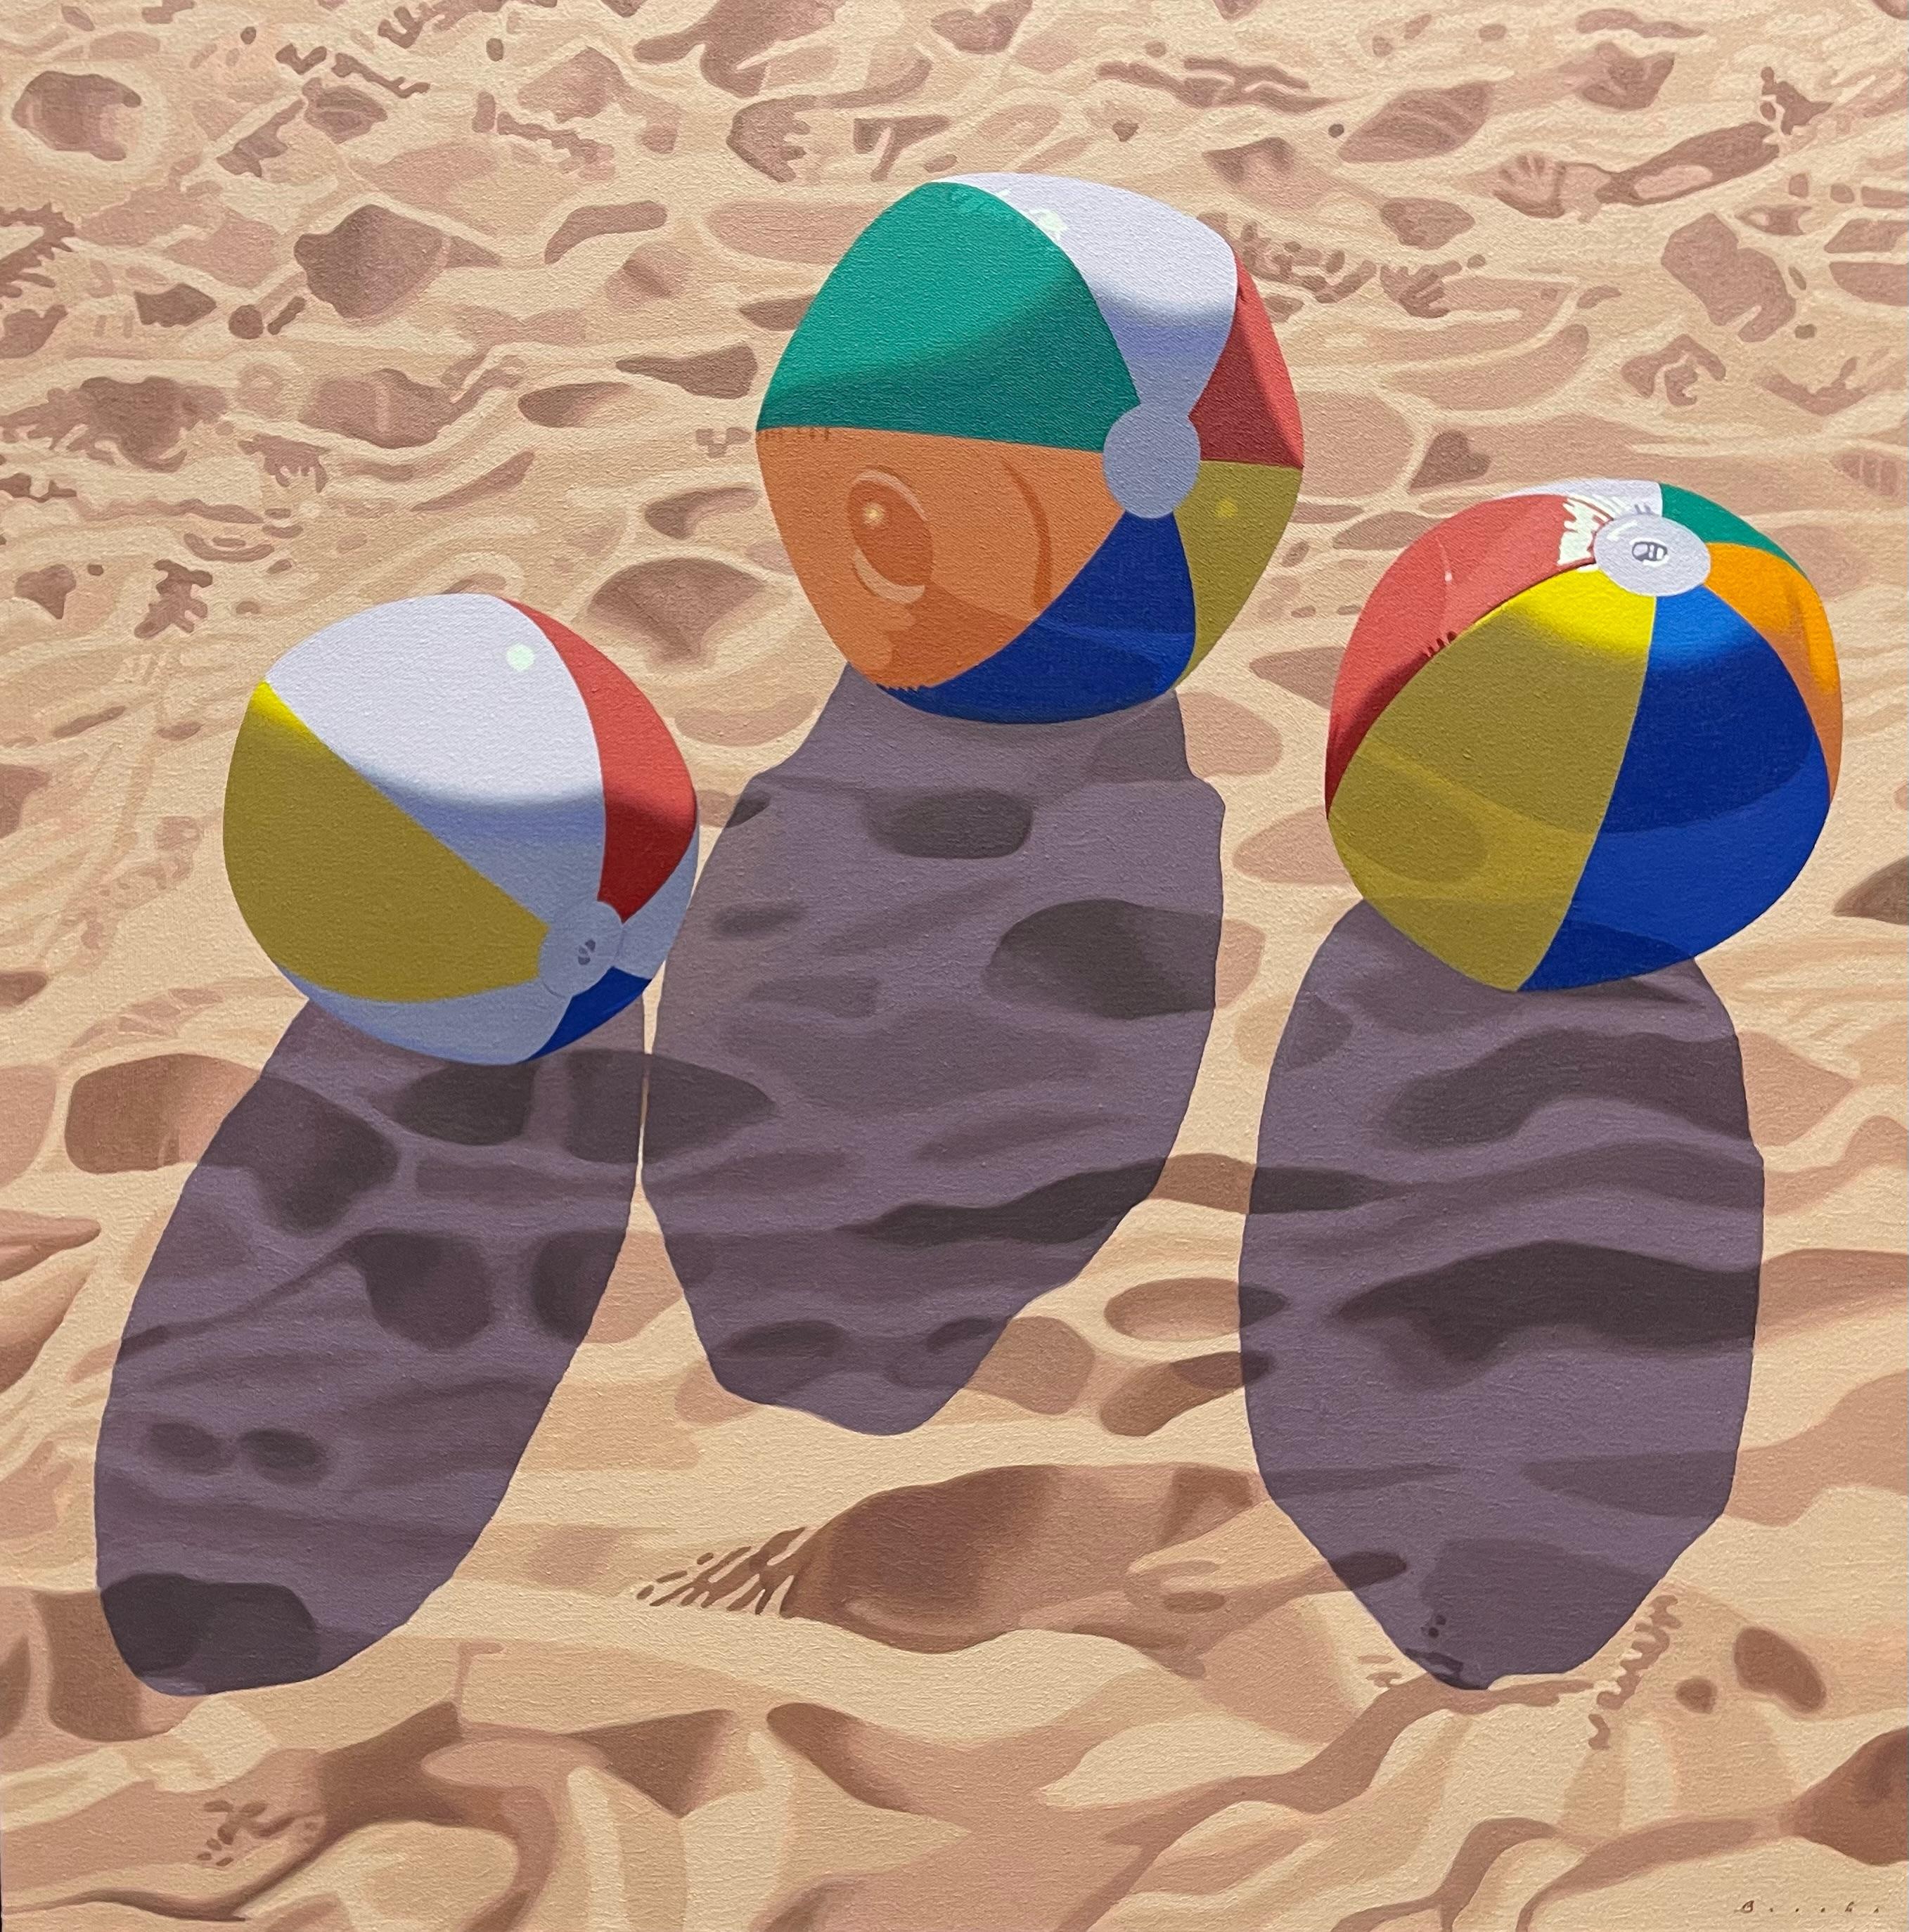 Rob Brooks Figurative Painting - "Beach Balls" photorealist oil painting of colorful beachballs on a sandy beach